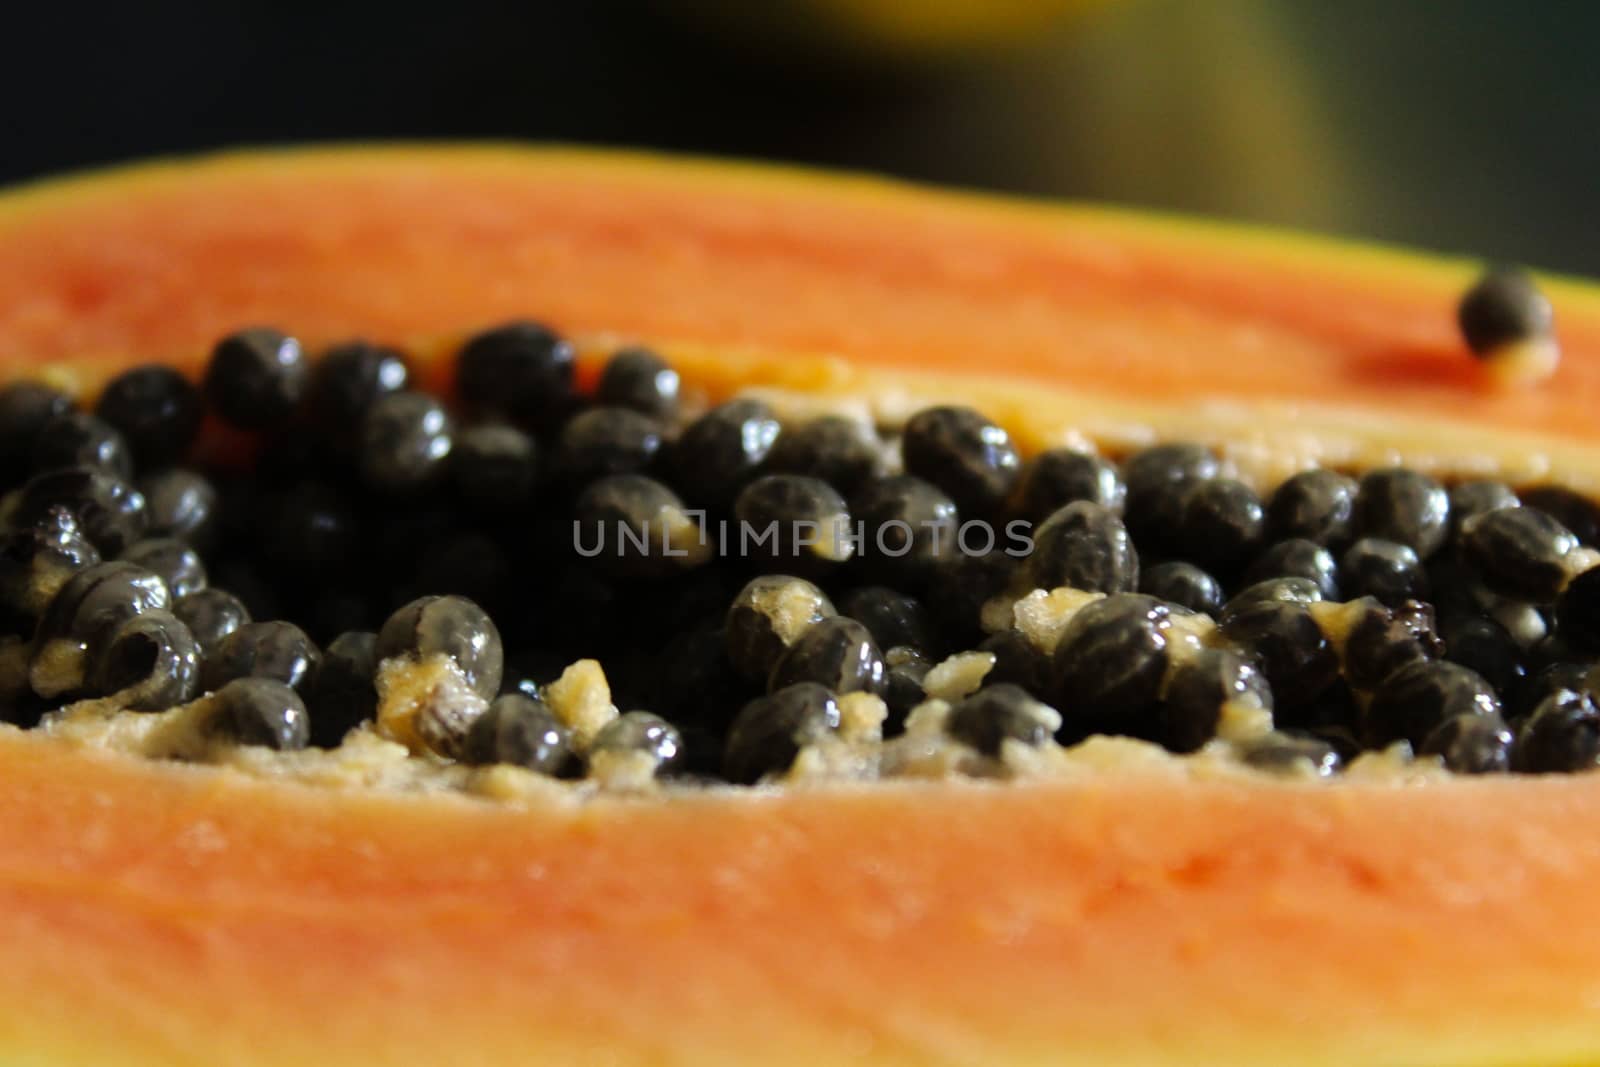 Half a papaya fruit, close up of black papaya seed.